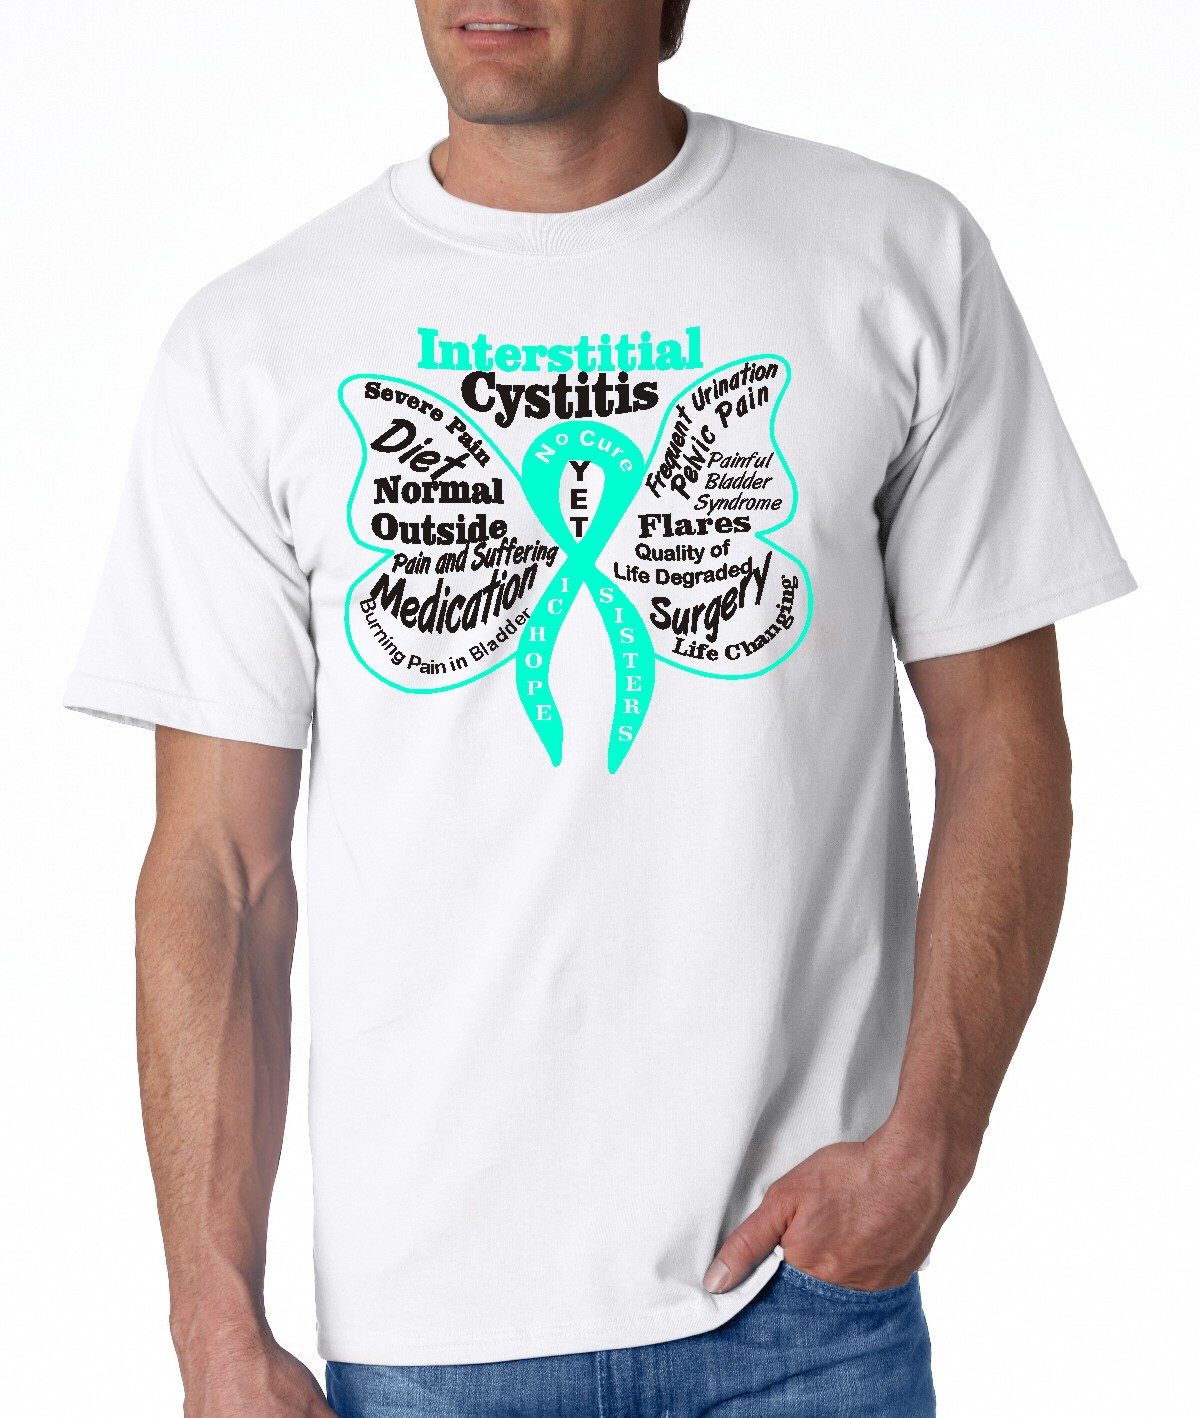 Interstitial Cystitis Awareness - short sleeve shirt no glitterflake